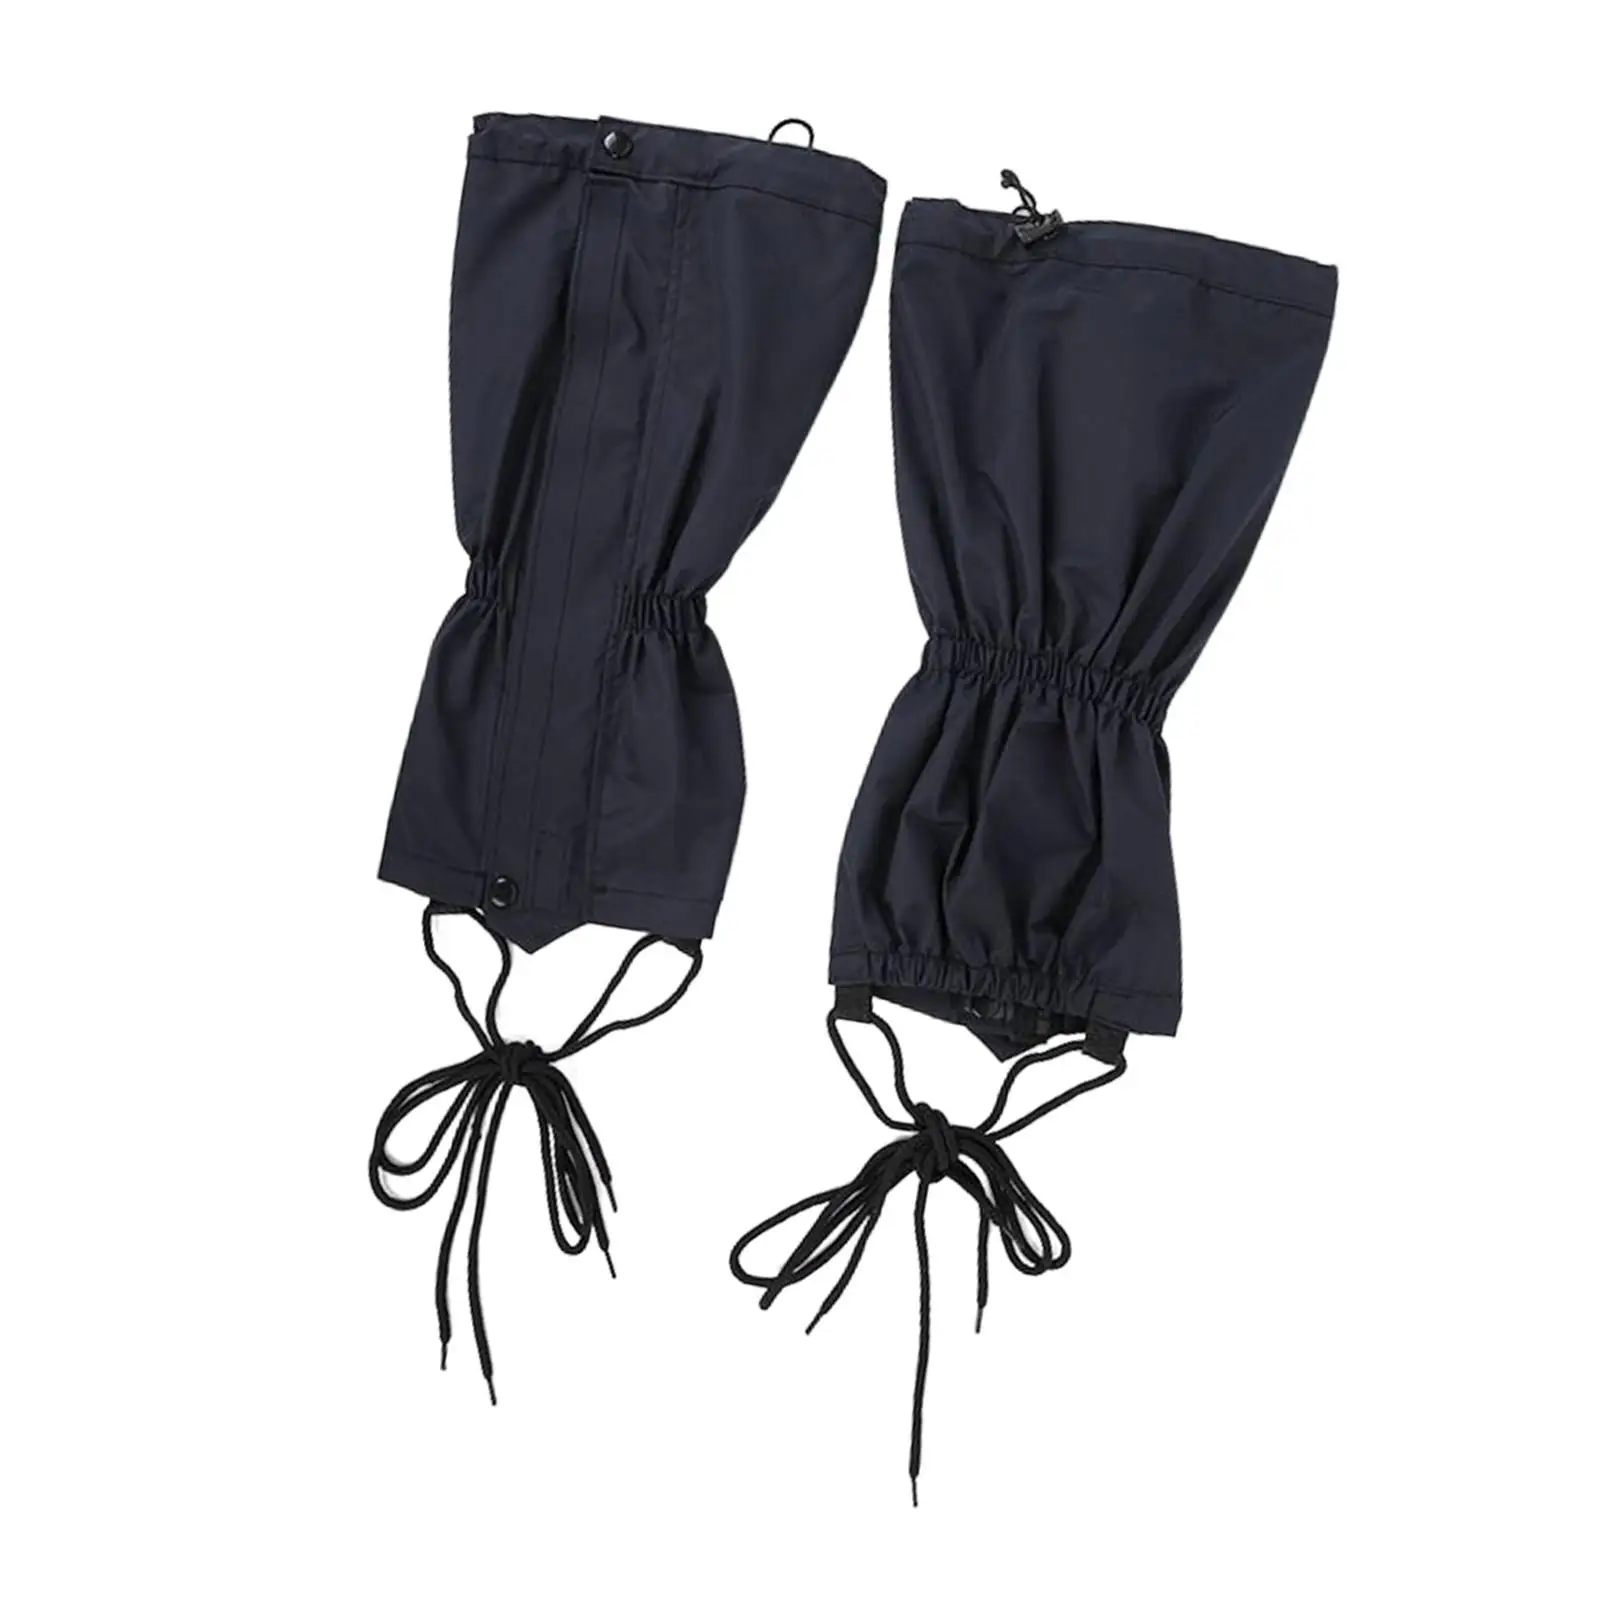 Rainproof Leg legging Legging Guard Adjustable Durable Waterproof Cover for Camping Outdoor Sports Hiking Unisex Running